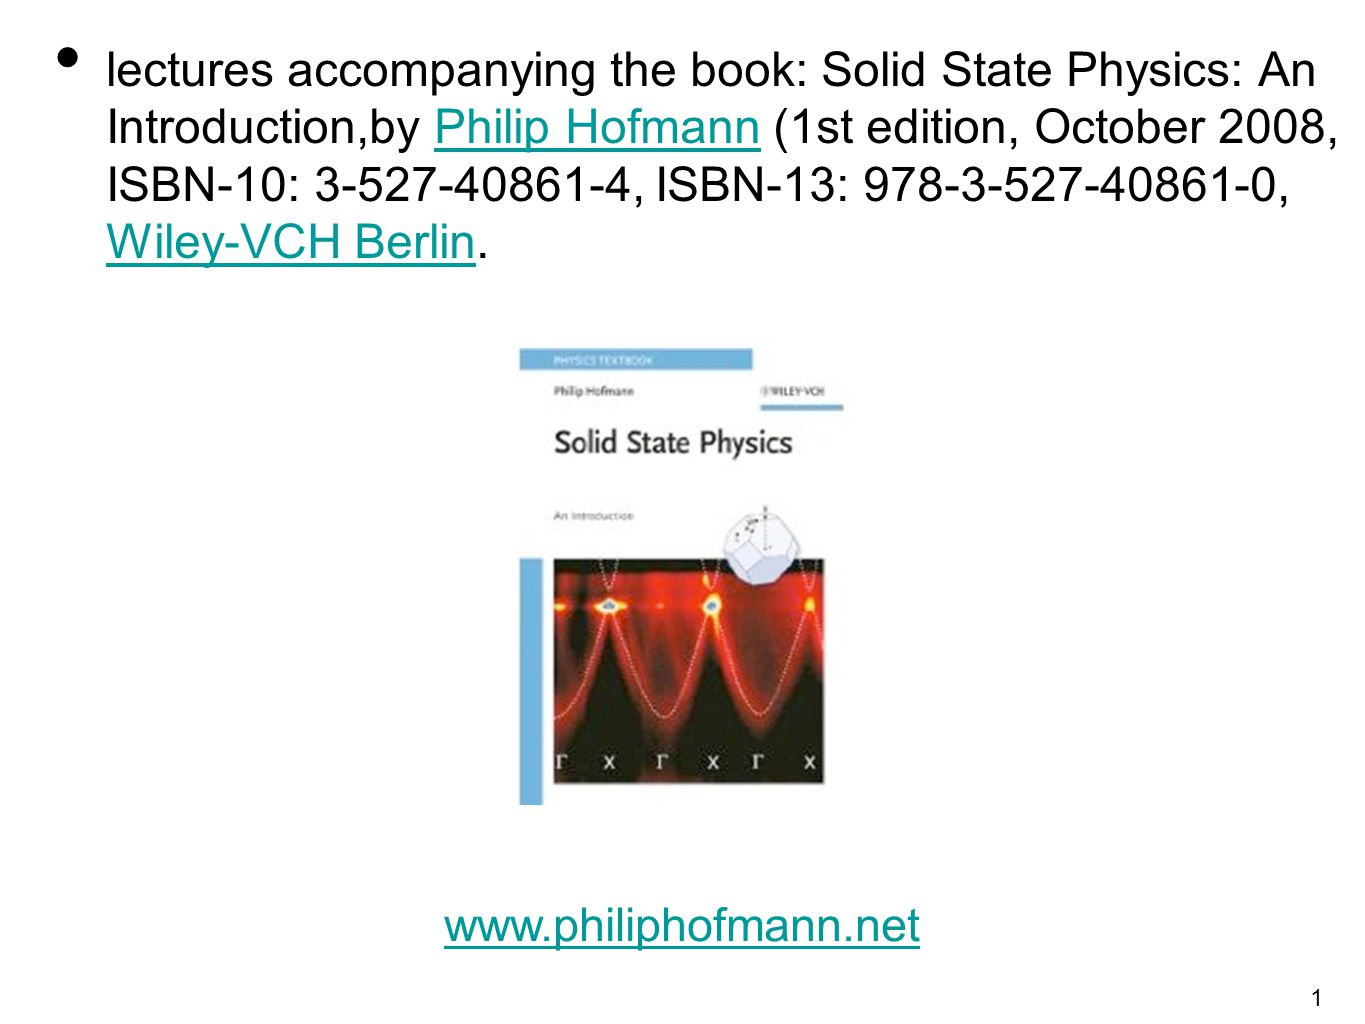 bunun faydası yok heyecan işten çıkarma  1 lectures accompanying the book: Solid State Physics: An Introduction,by Philip  Hofmann (1st edition, October 2008, ISBN-10: , ISBN-13: , - ppt download